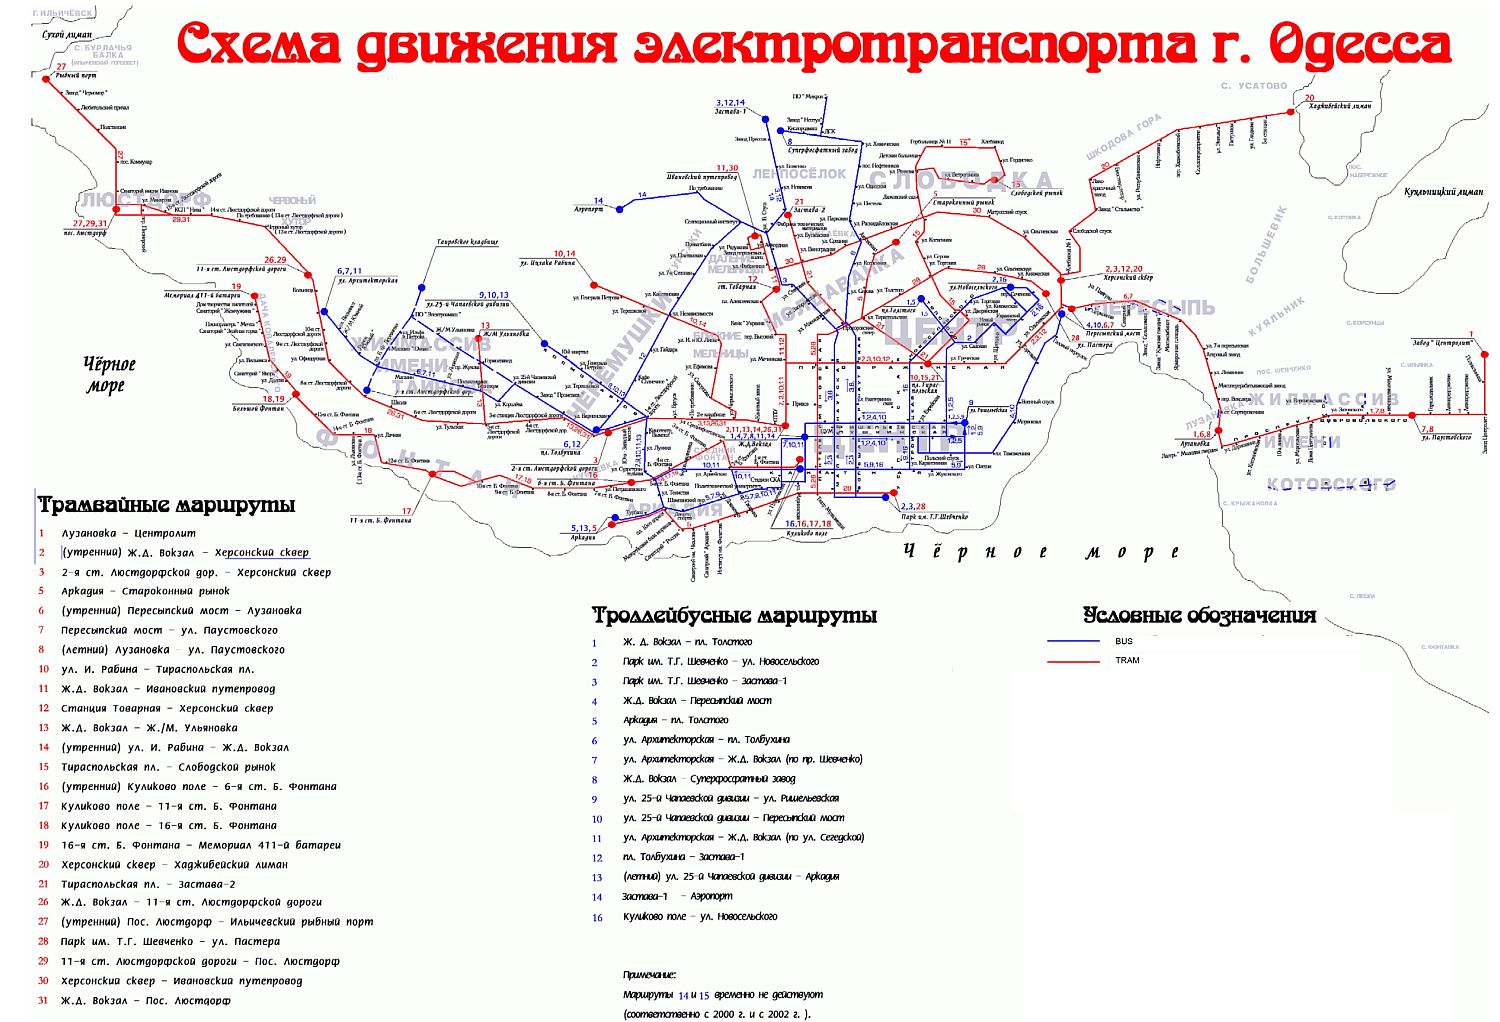 map of odessa